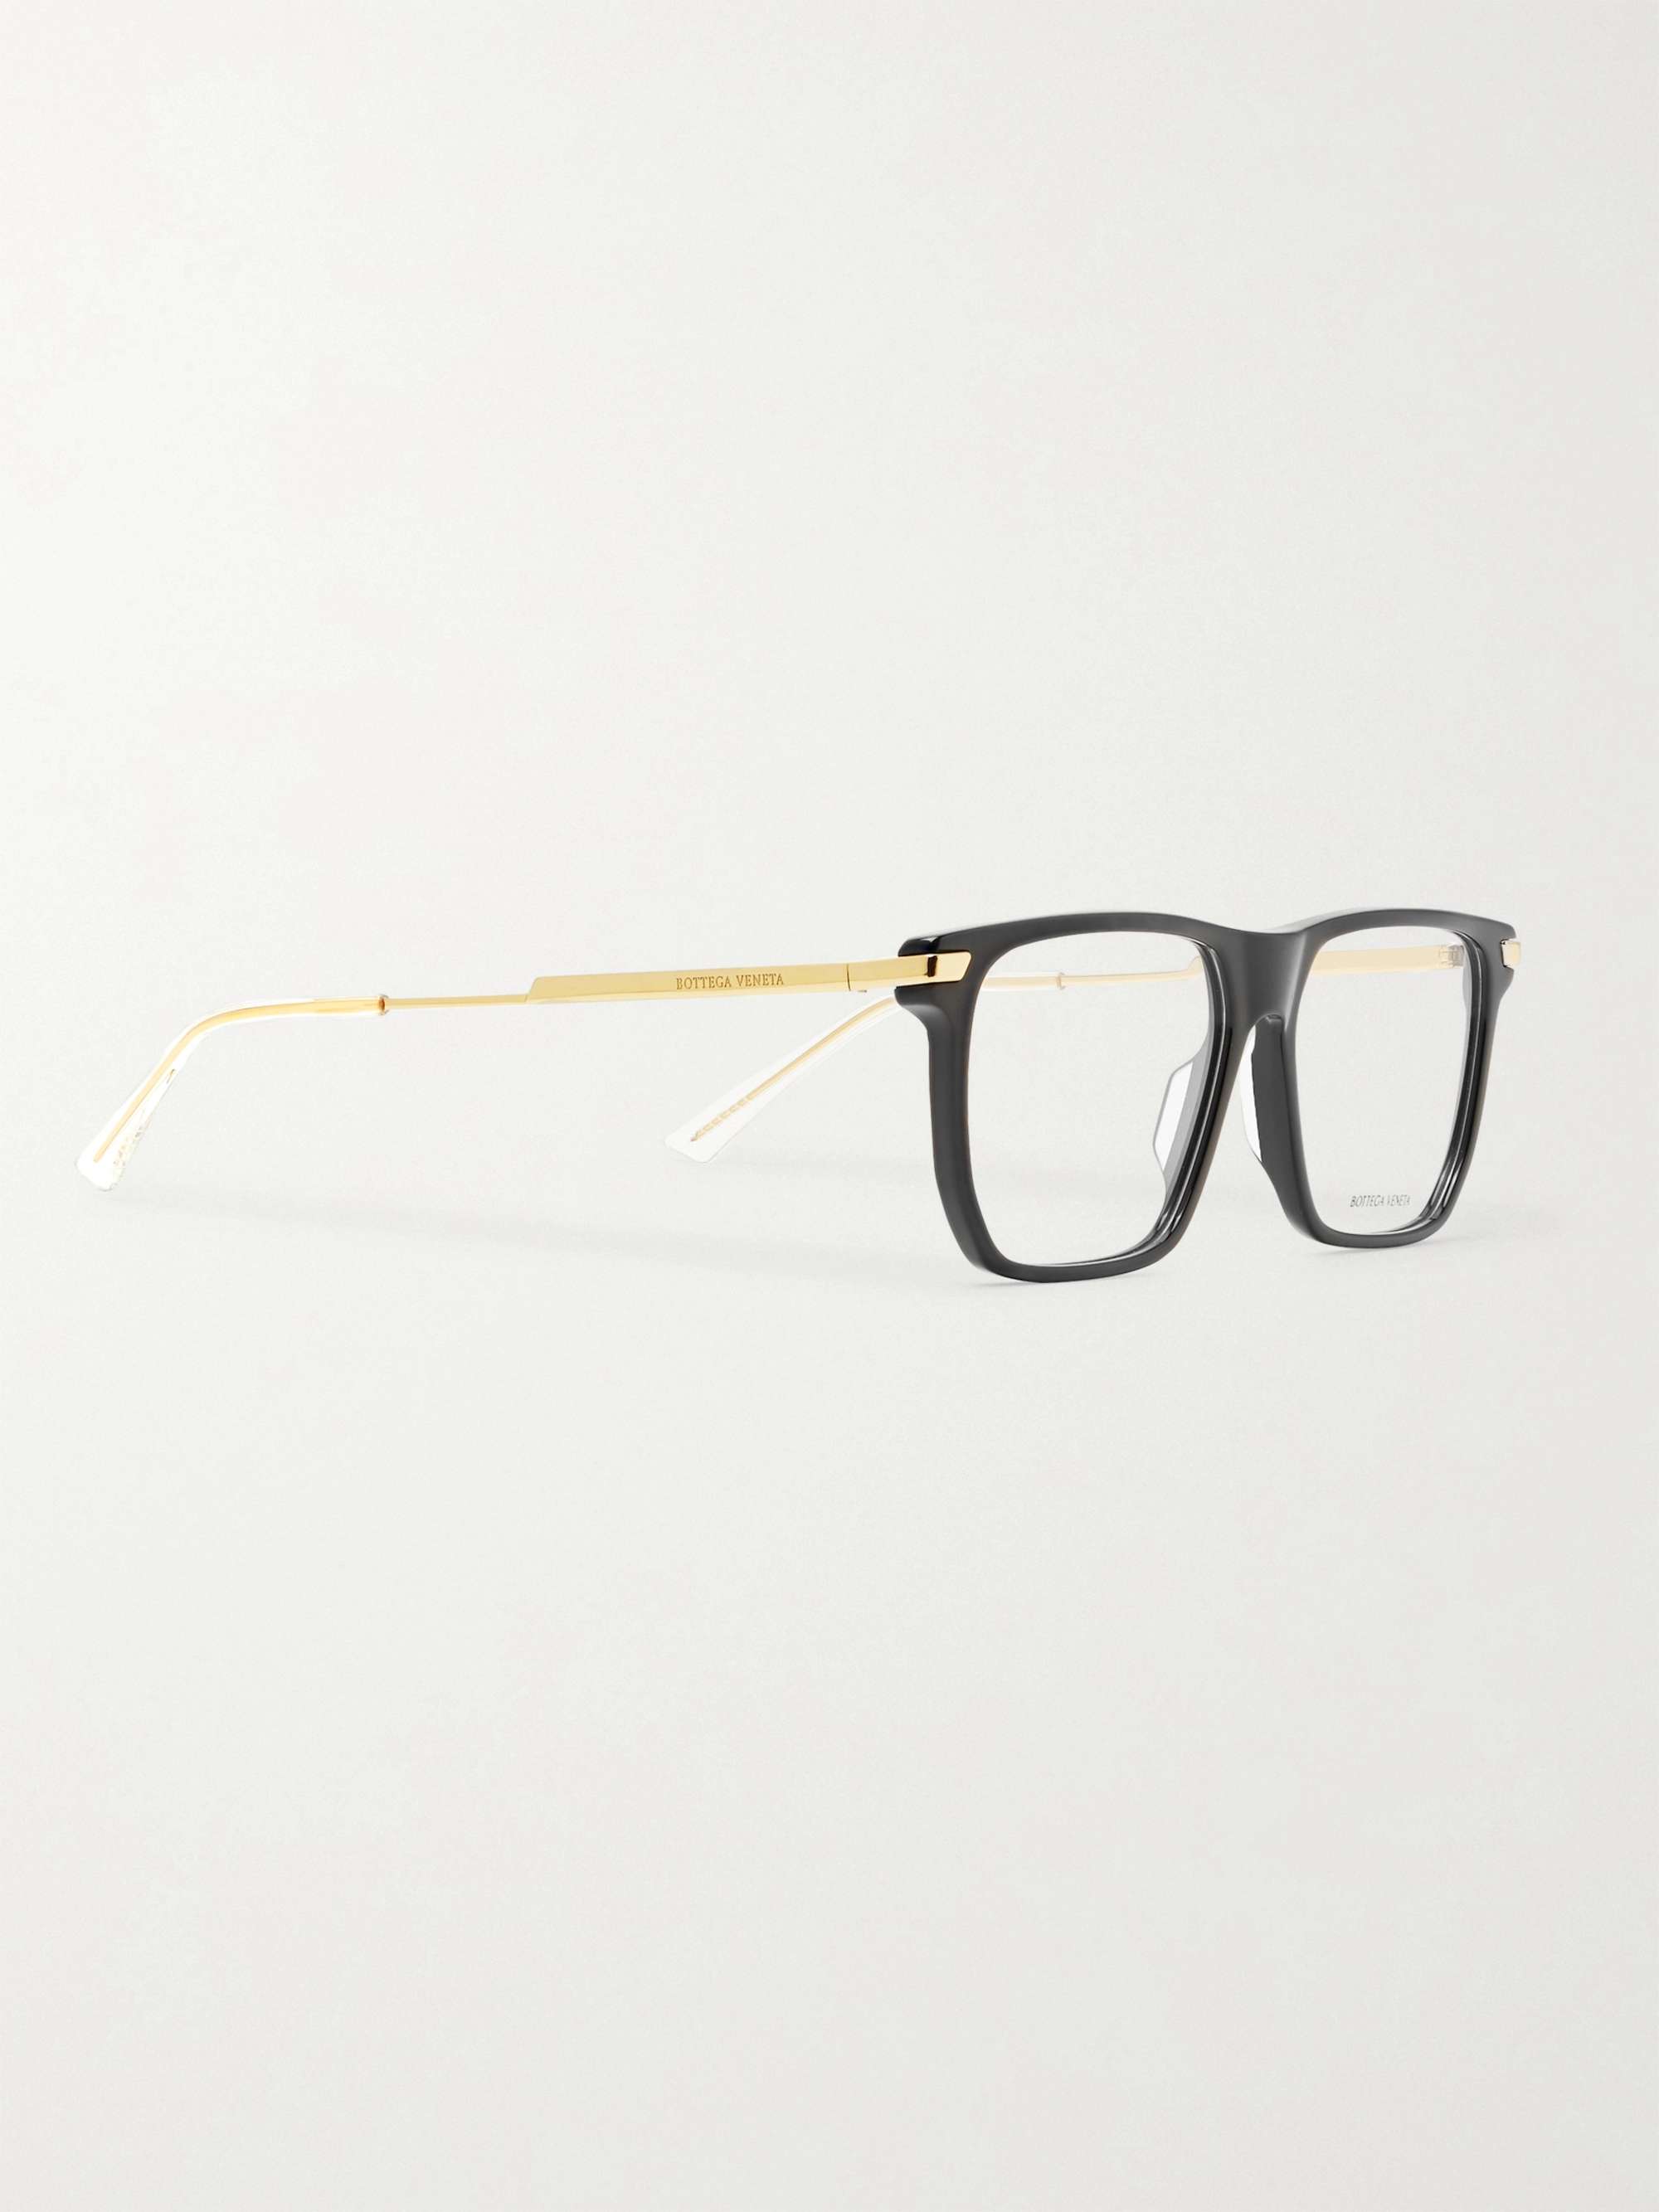 BOTTEGA VENETA EYEWEAR Square-Frame Tortoiseshell Acetate and Gold-Tone Optical Glasses